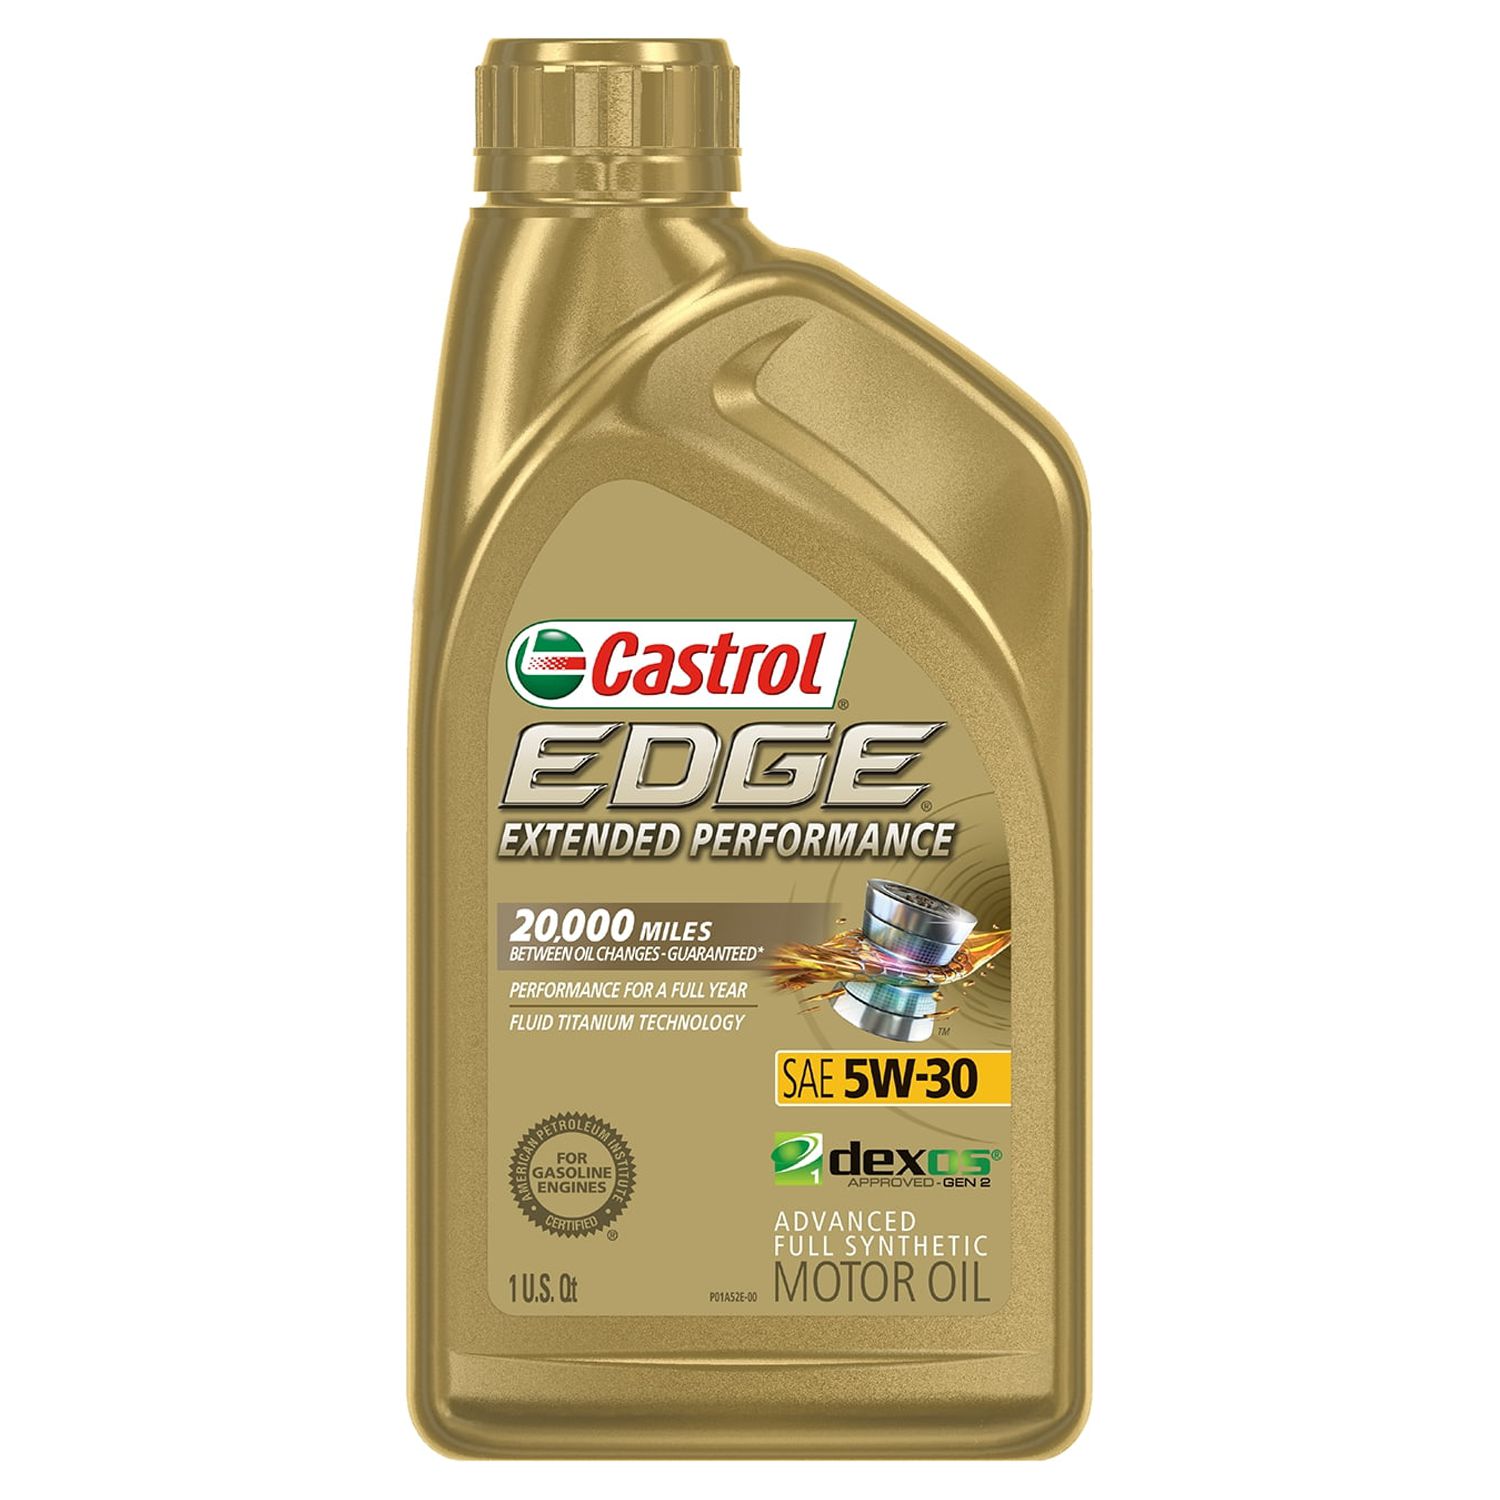 Castrol Edge Extended Performance 5W-30 Advanced Full Synthetic Motor Oil, 1 Quart - image 3 of 14